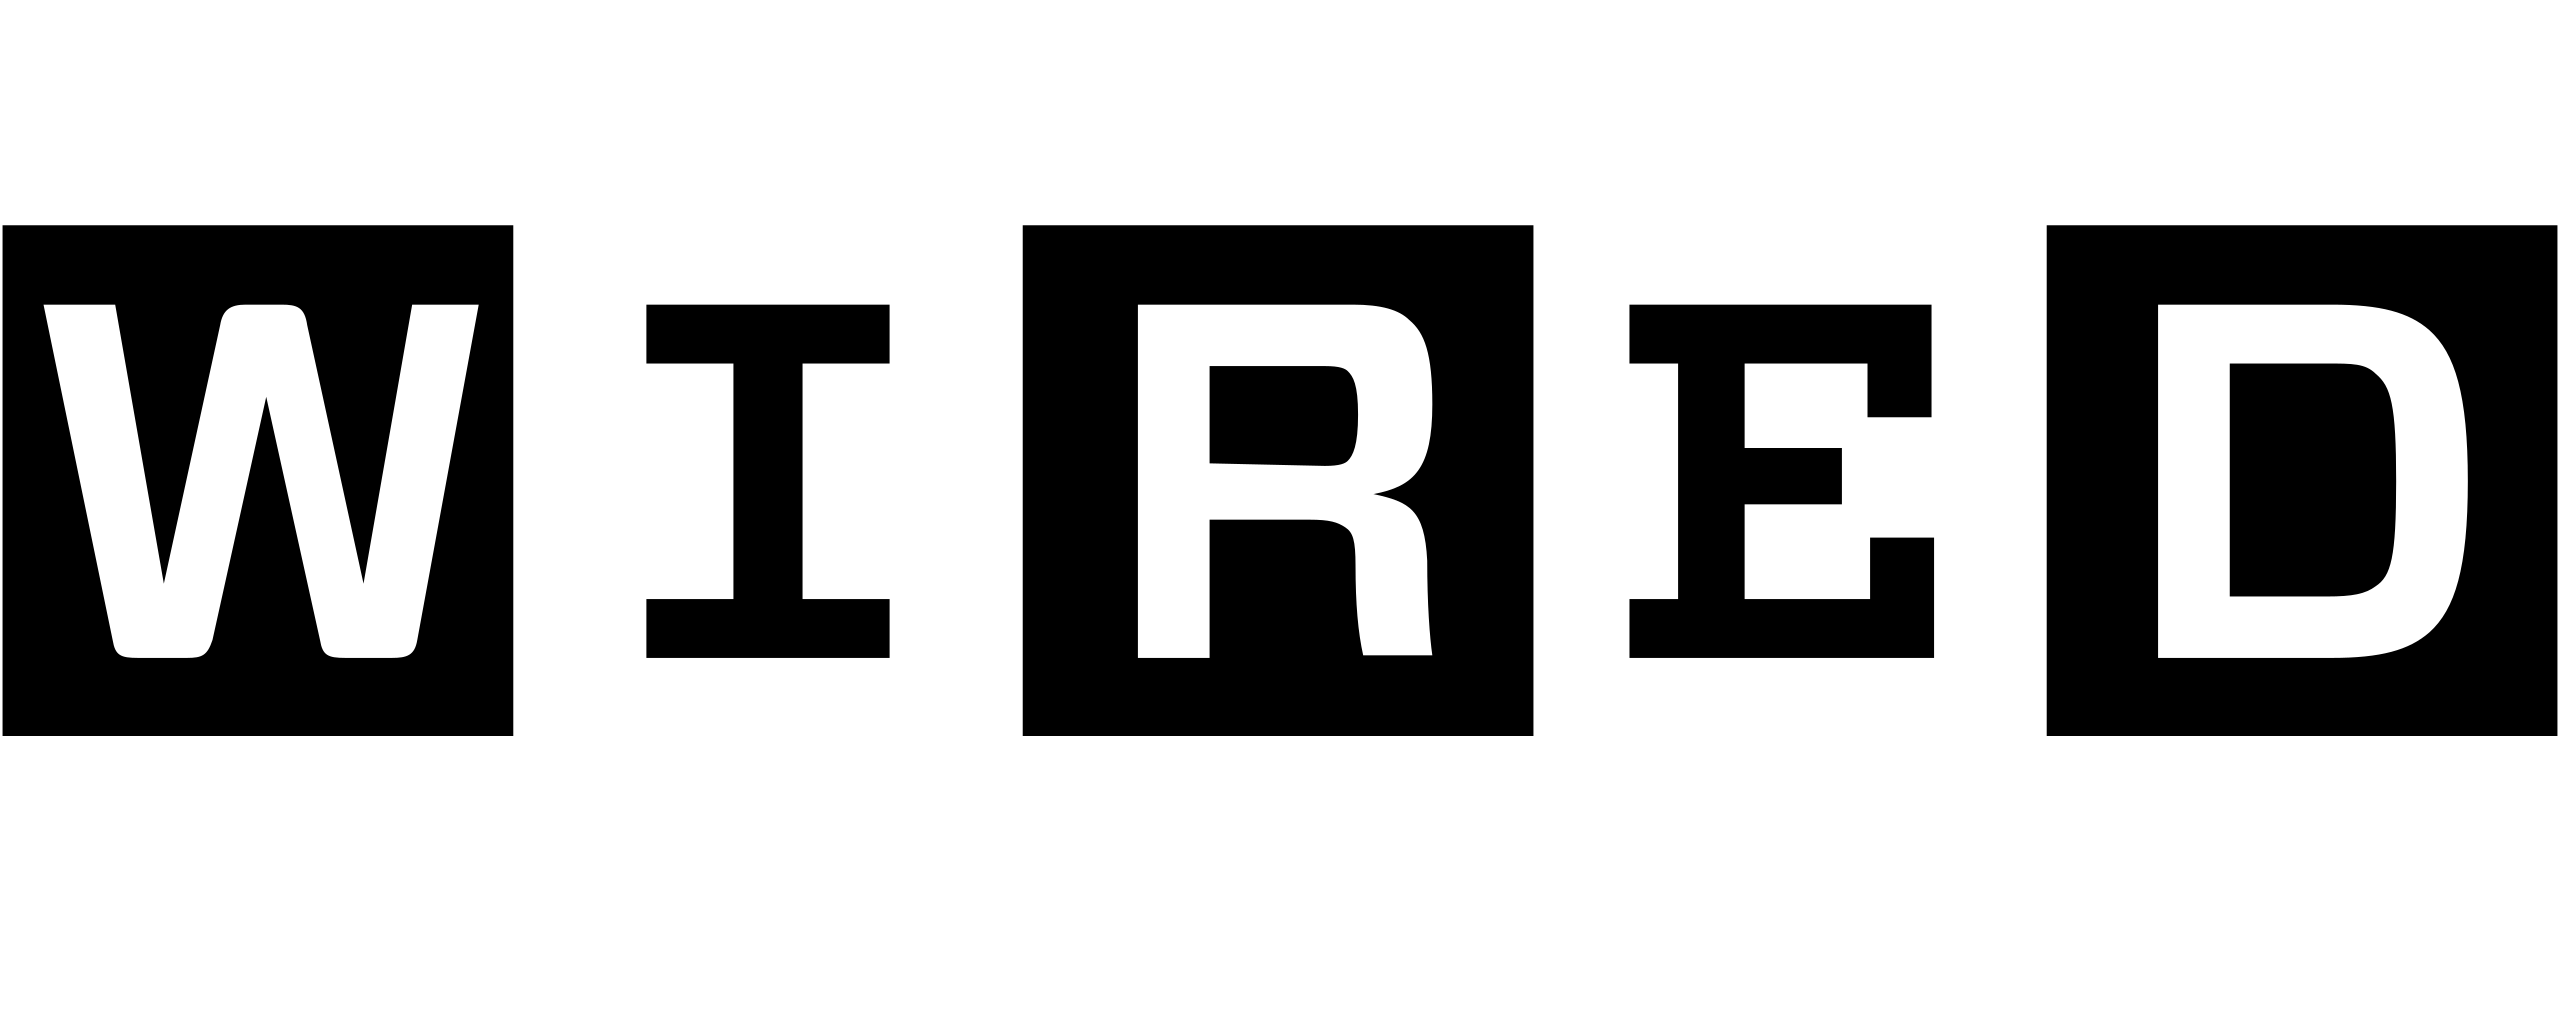 2560px-Wired_logo.svg